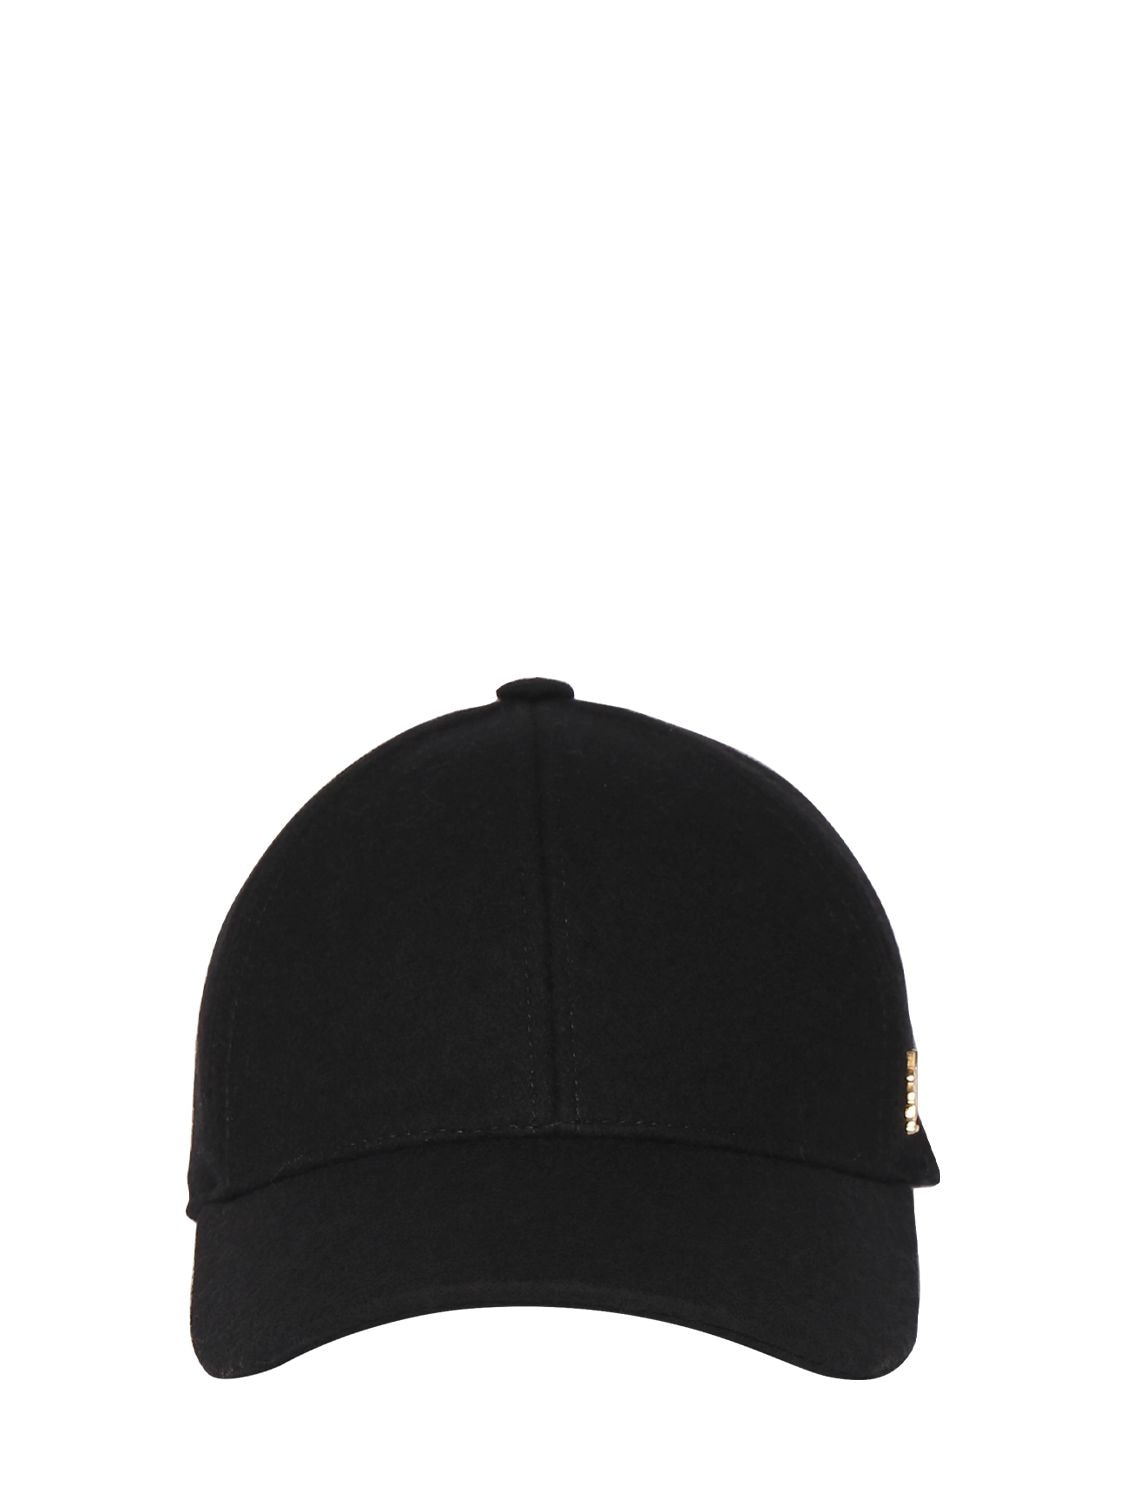 Baseball Cap Ysl In Felt Black  Saint Laurent Womens Hats And